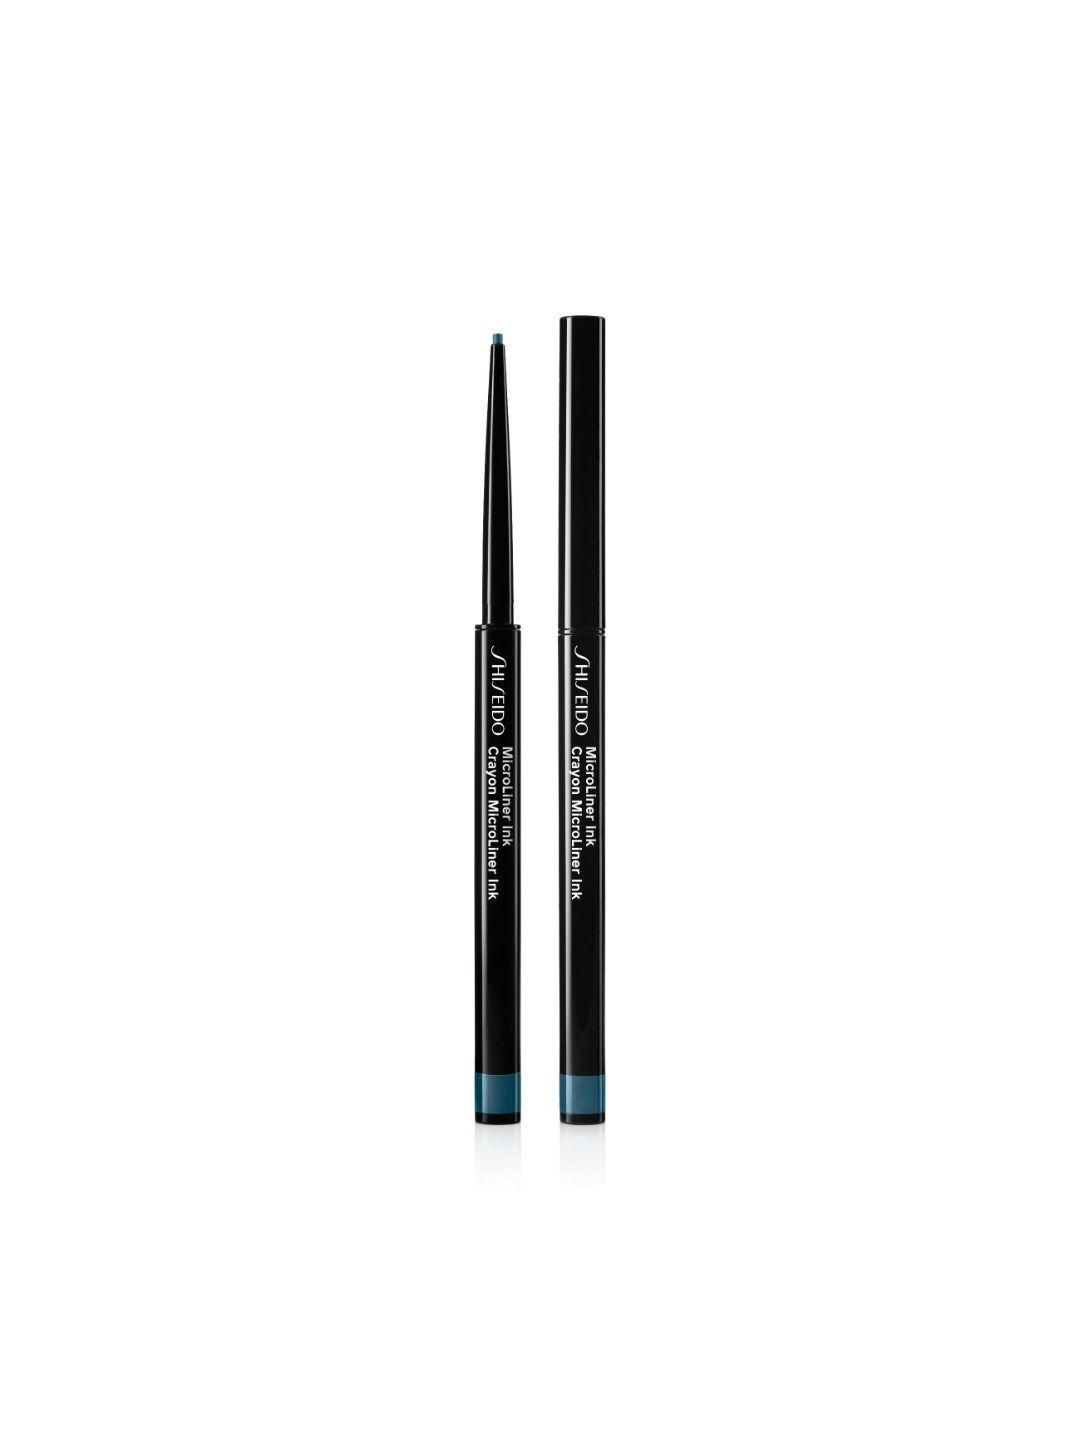 shiseido crayon microliner ink - teal 08